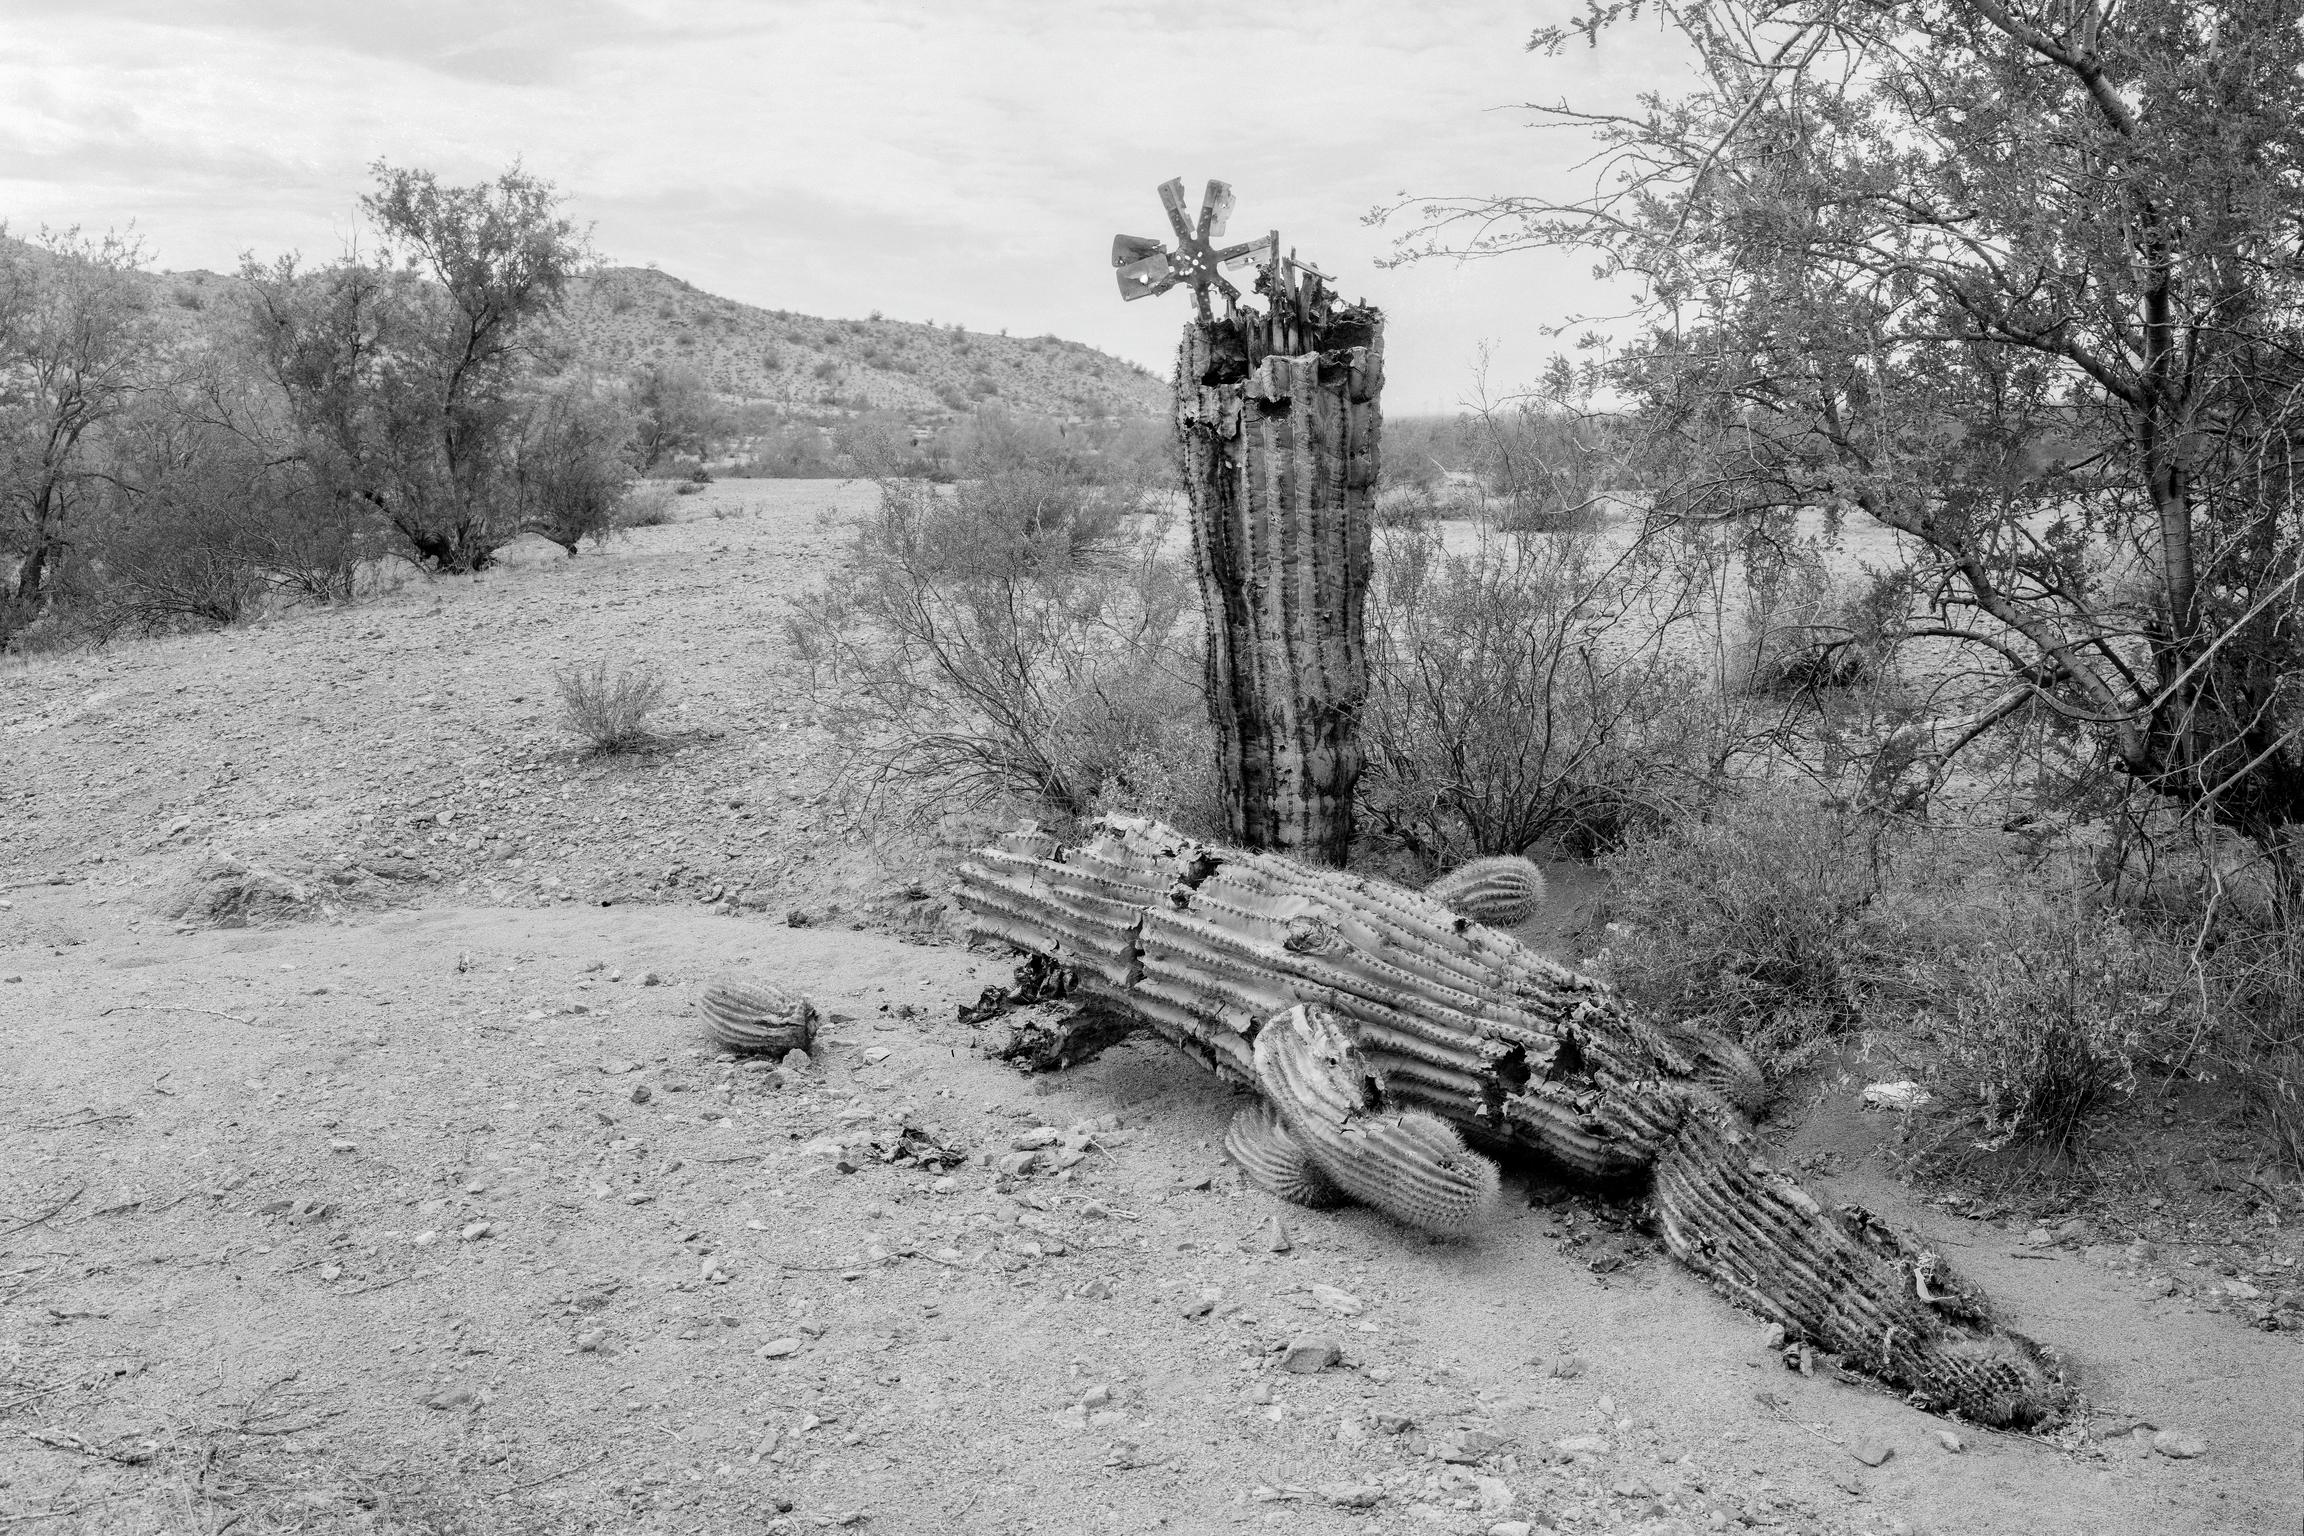 Target shooting in the desert just outside of Phoenix, Arizona USA